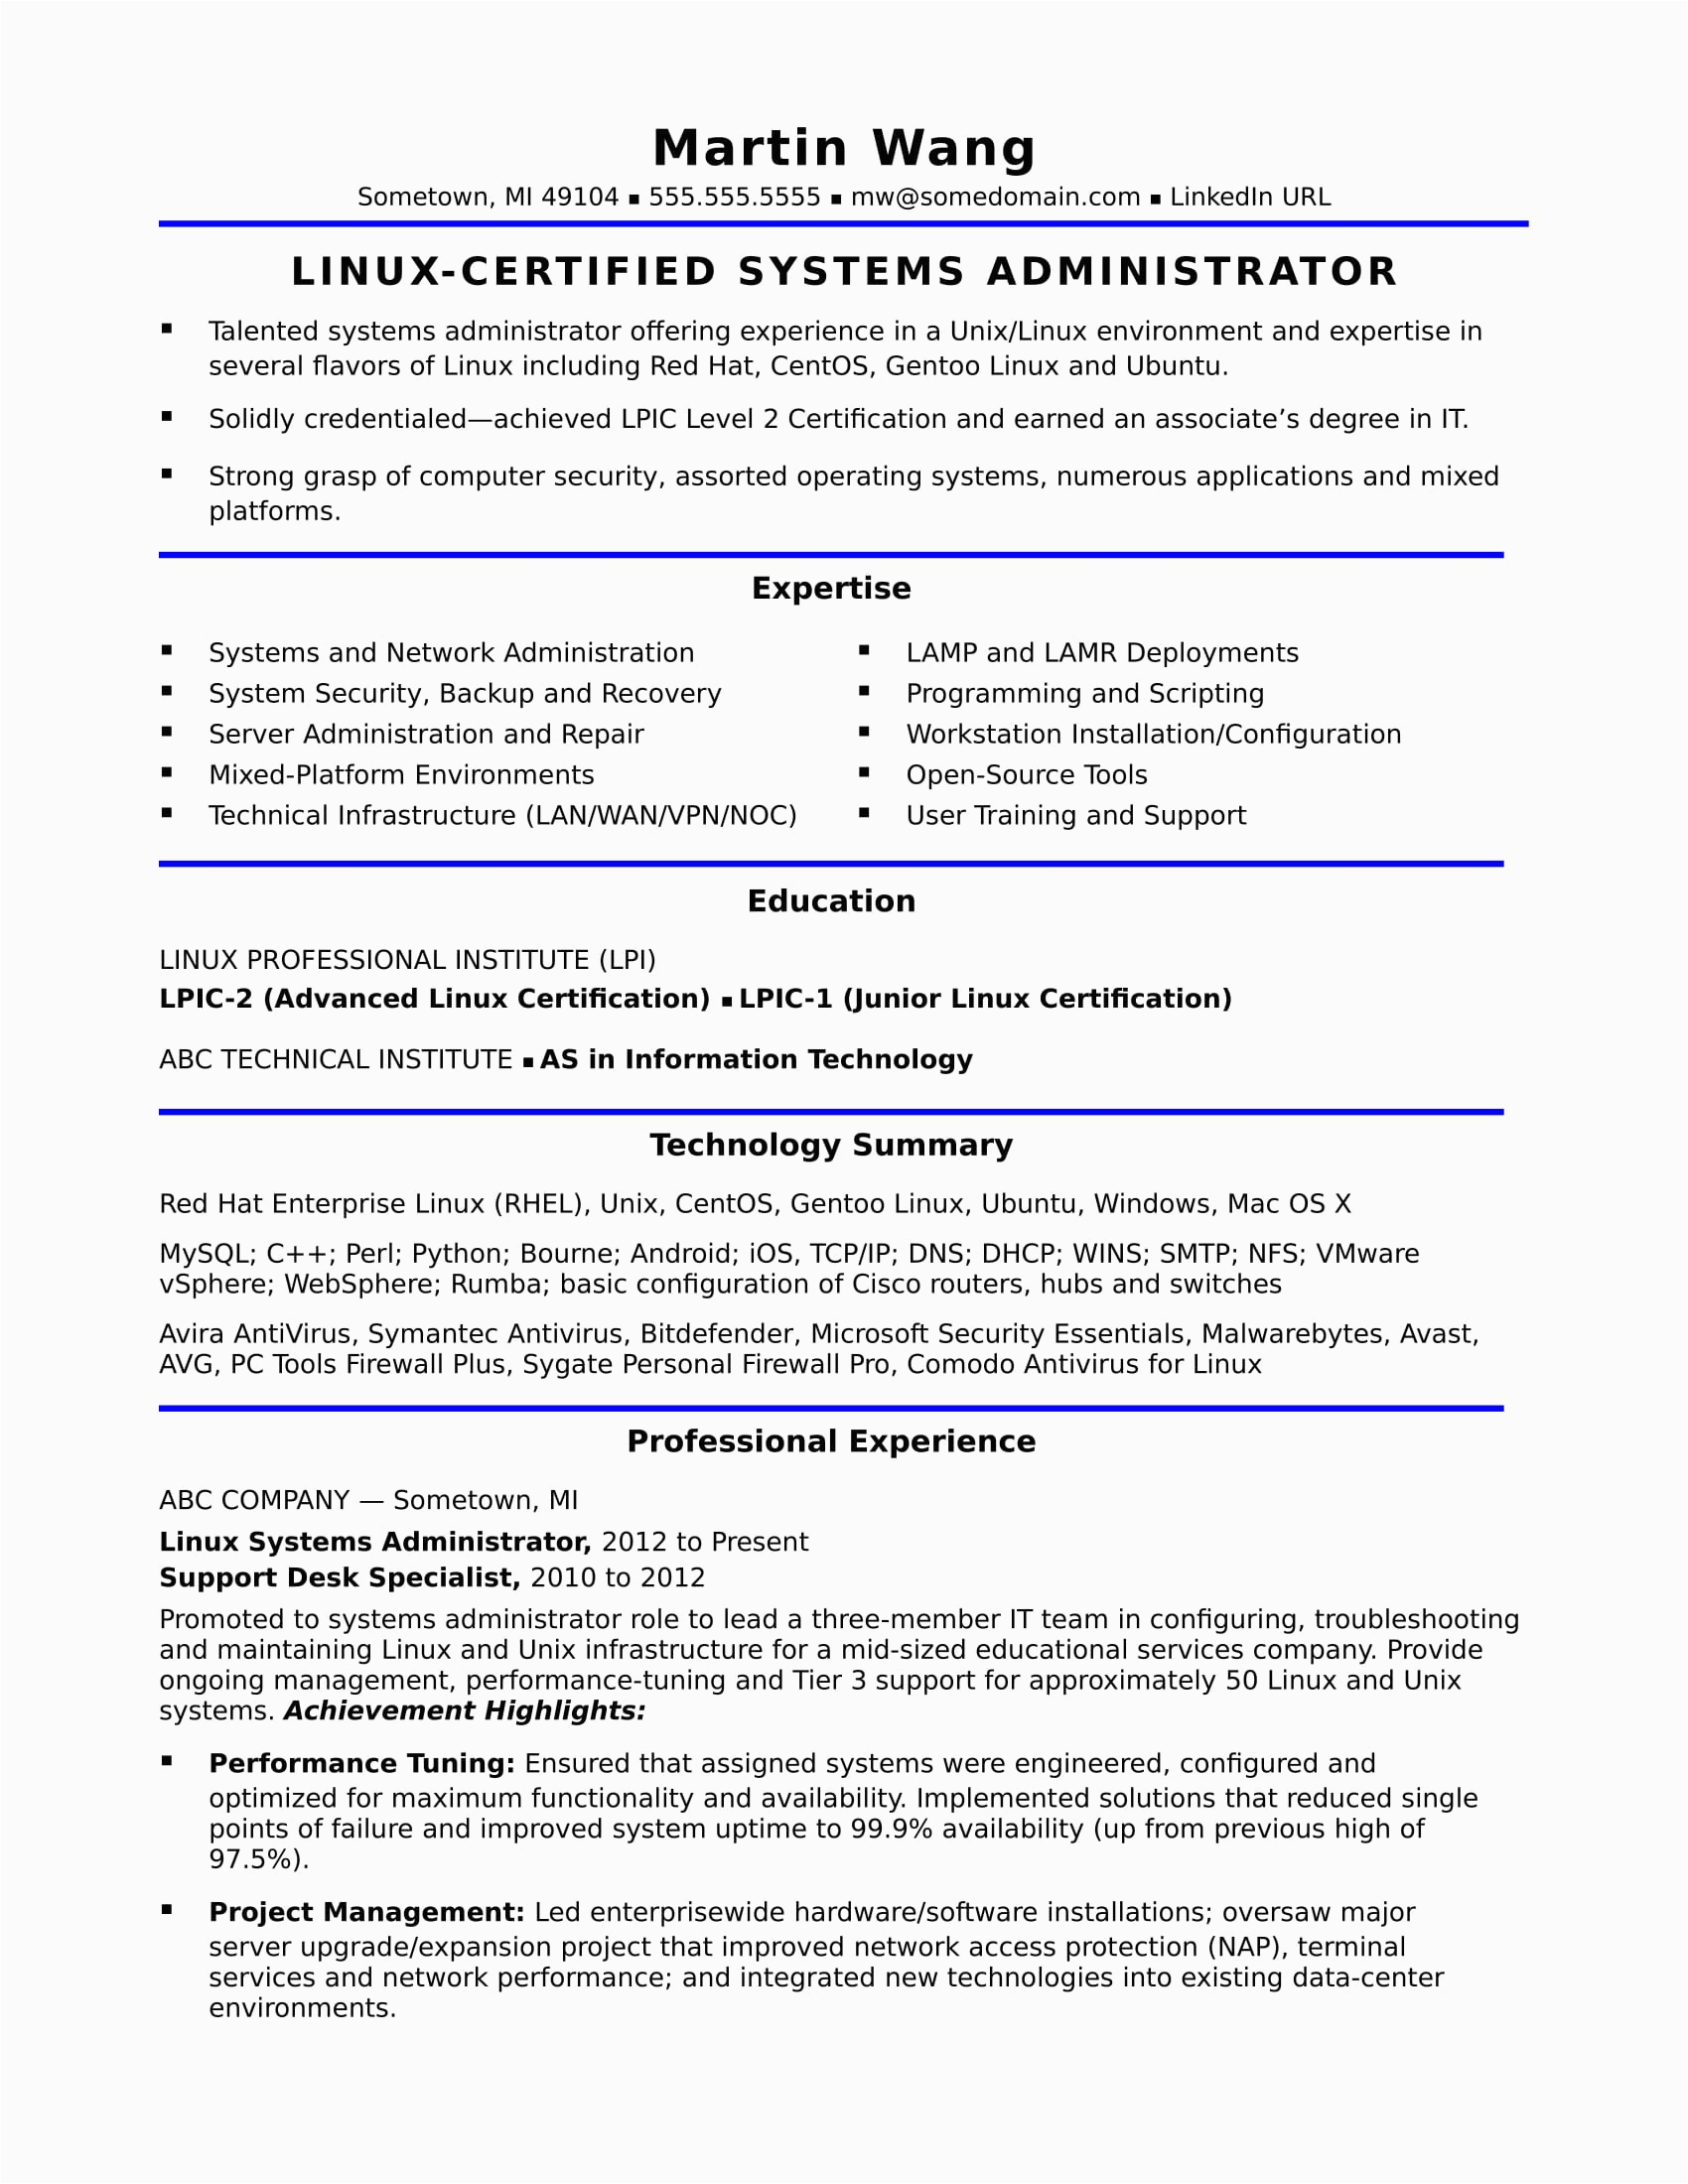 Entry Level System Administrator Resume Sample Sample Resume for A Midlevel Systems Administrator